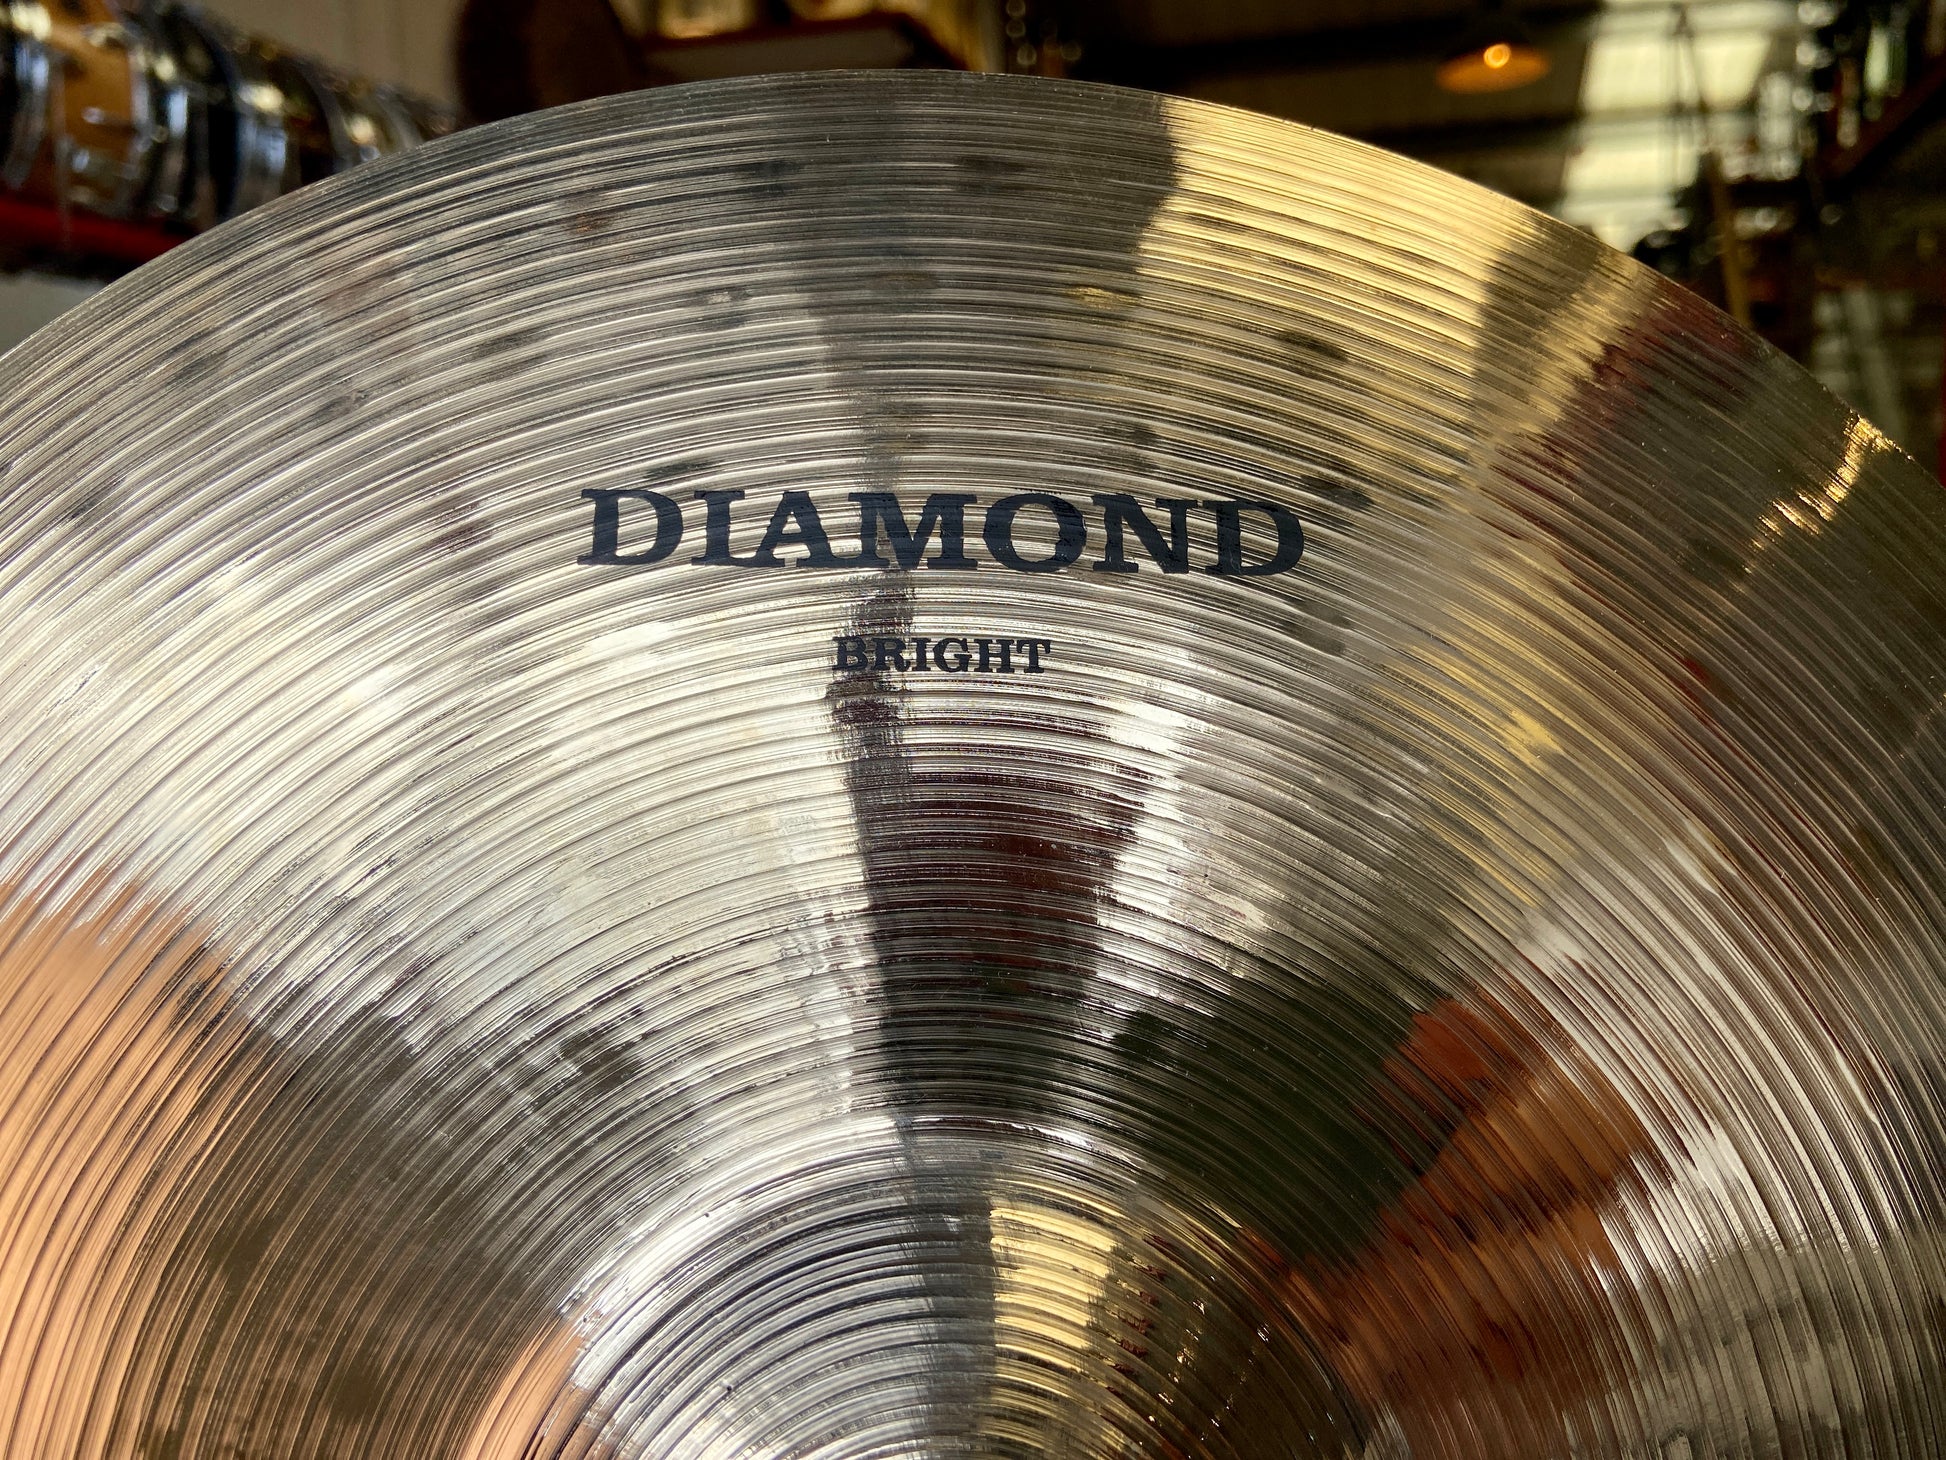 Diamond Bright 12" Splash Cymbal